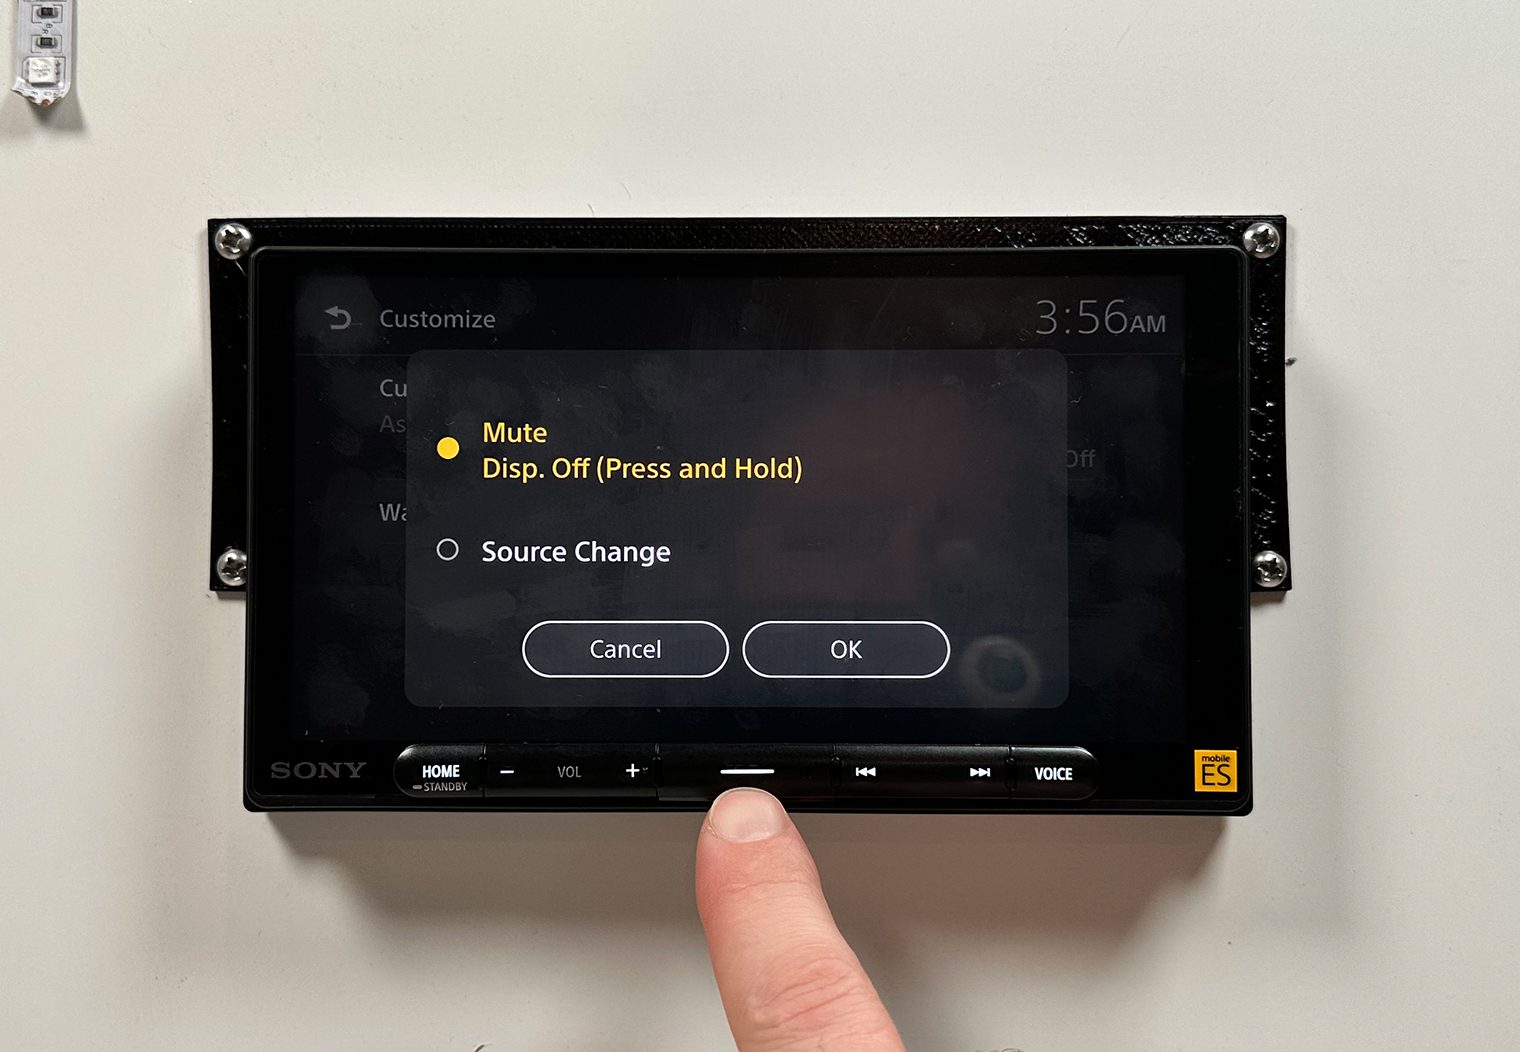 Sony XAV-9000ES setting the custom key button